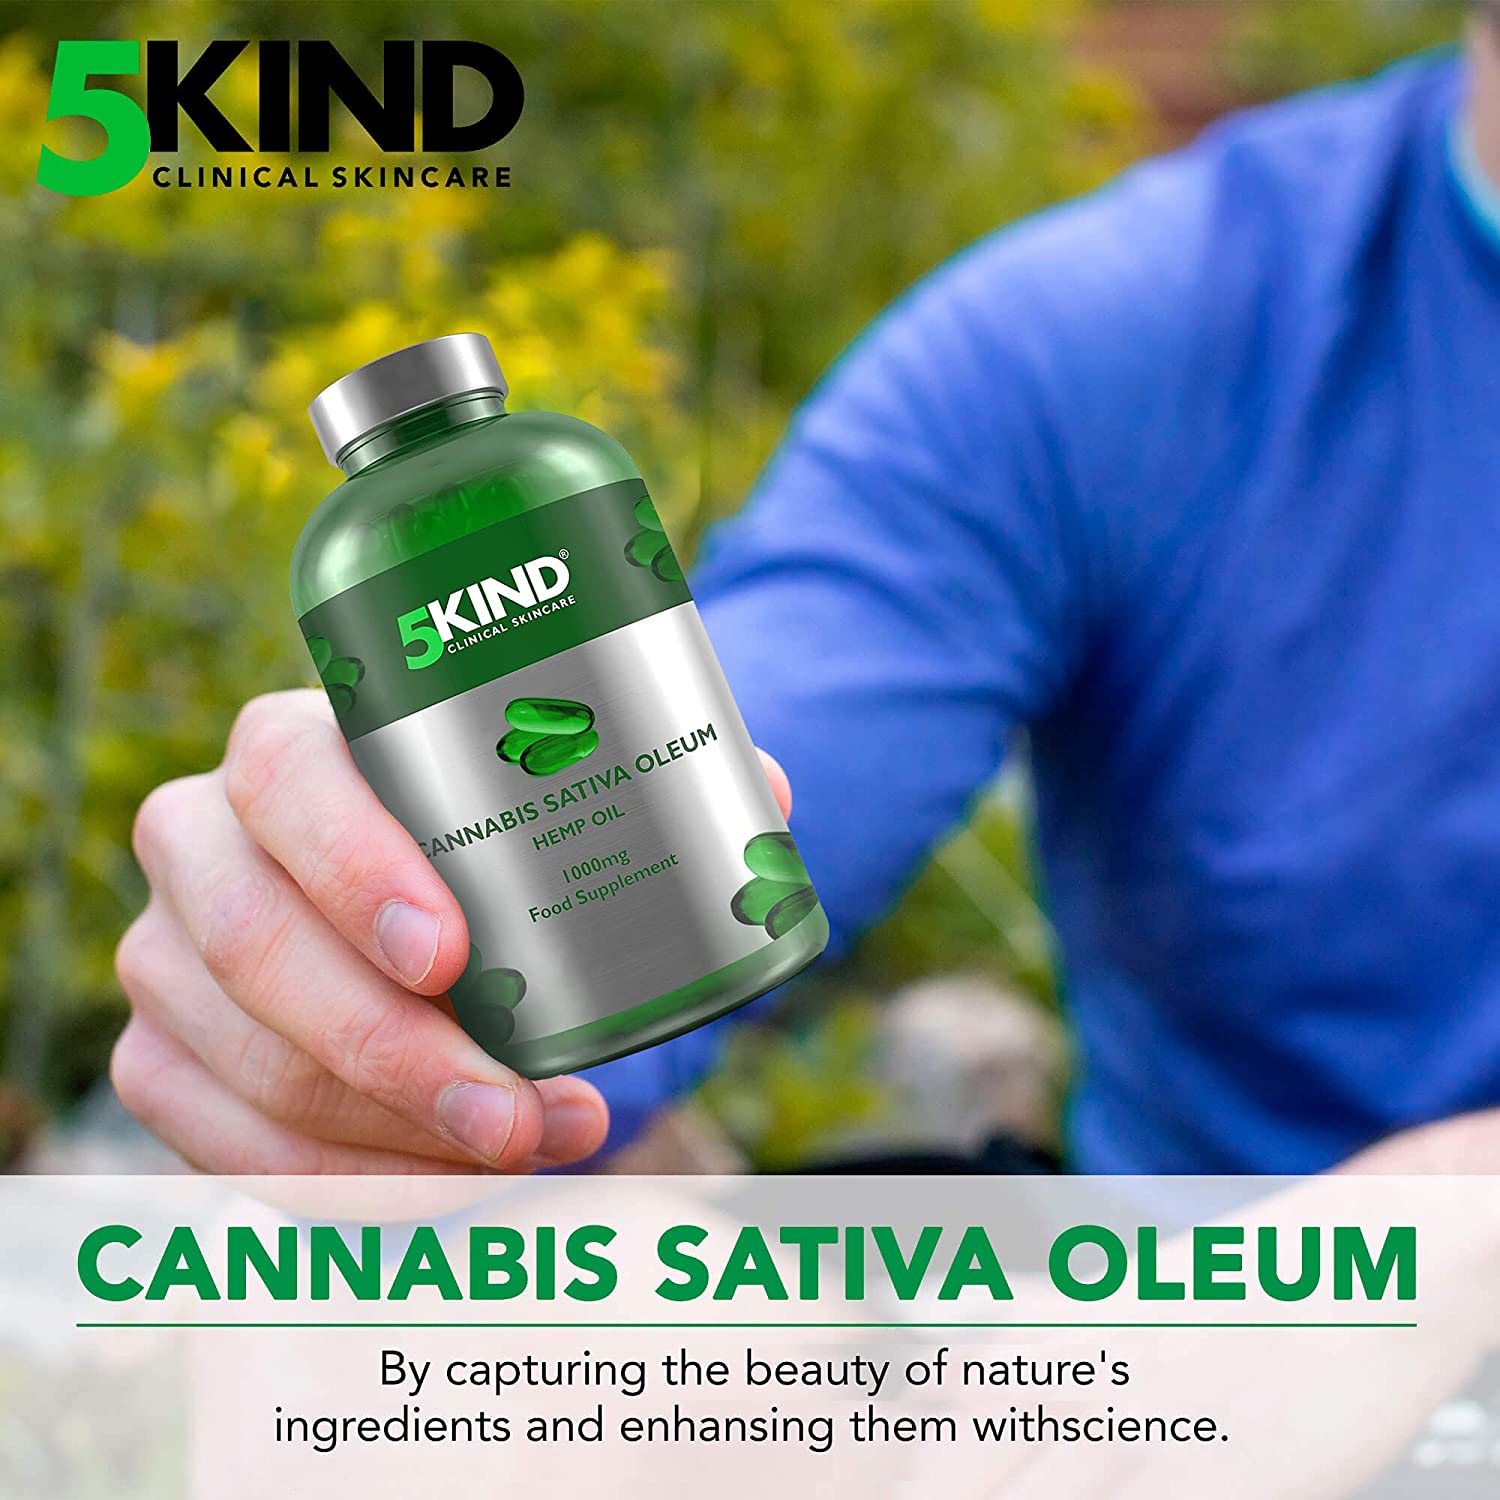 5Kind Cannabis Sativa Samenöl 1000mg Weichkapseln